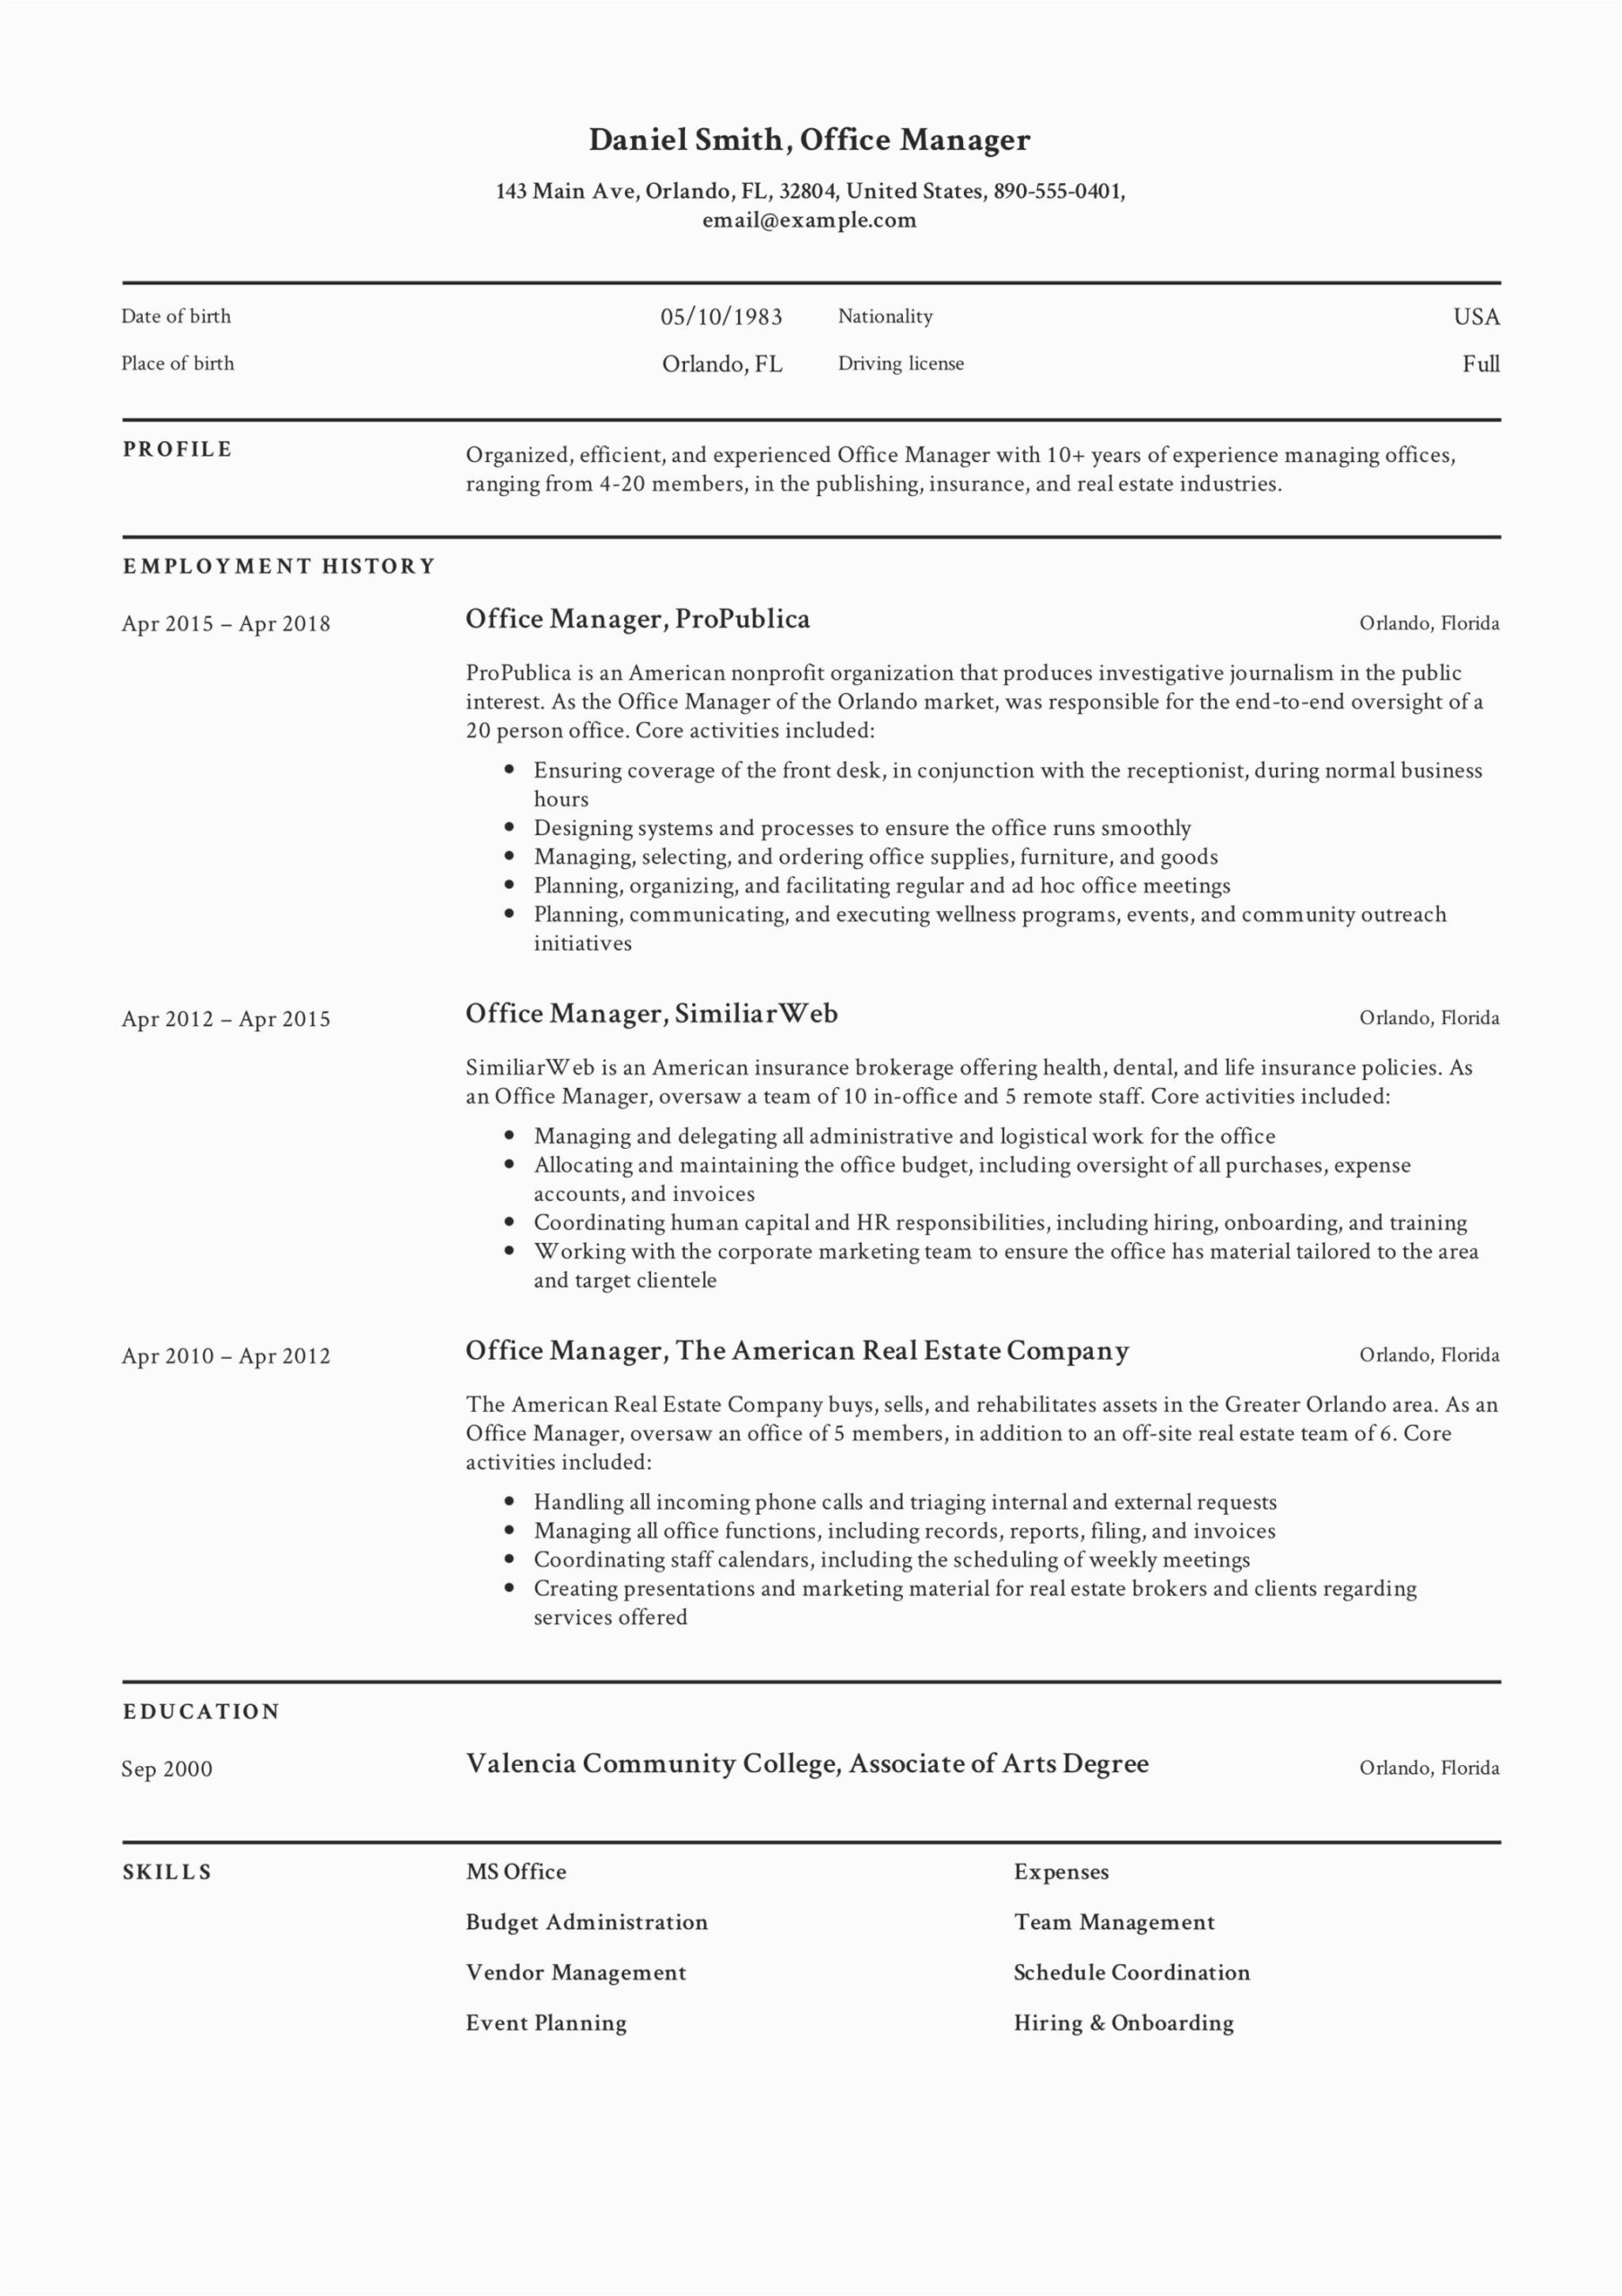 Office Manager Job Description Resume Sample Guide Fice Manager Resume [ 12 Samples ] Pdf